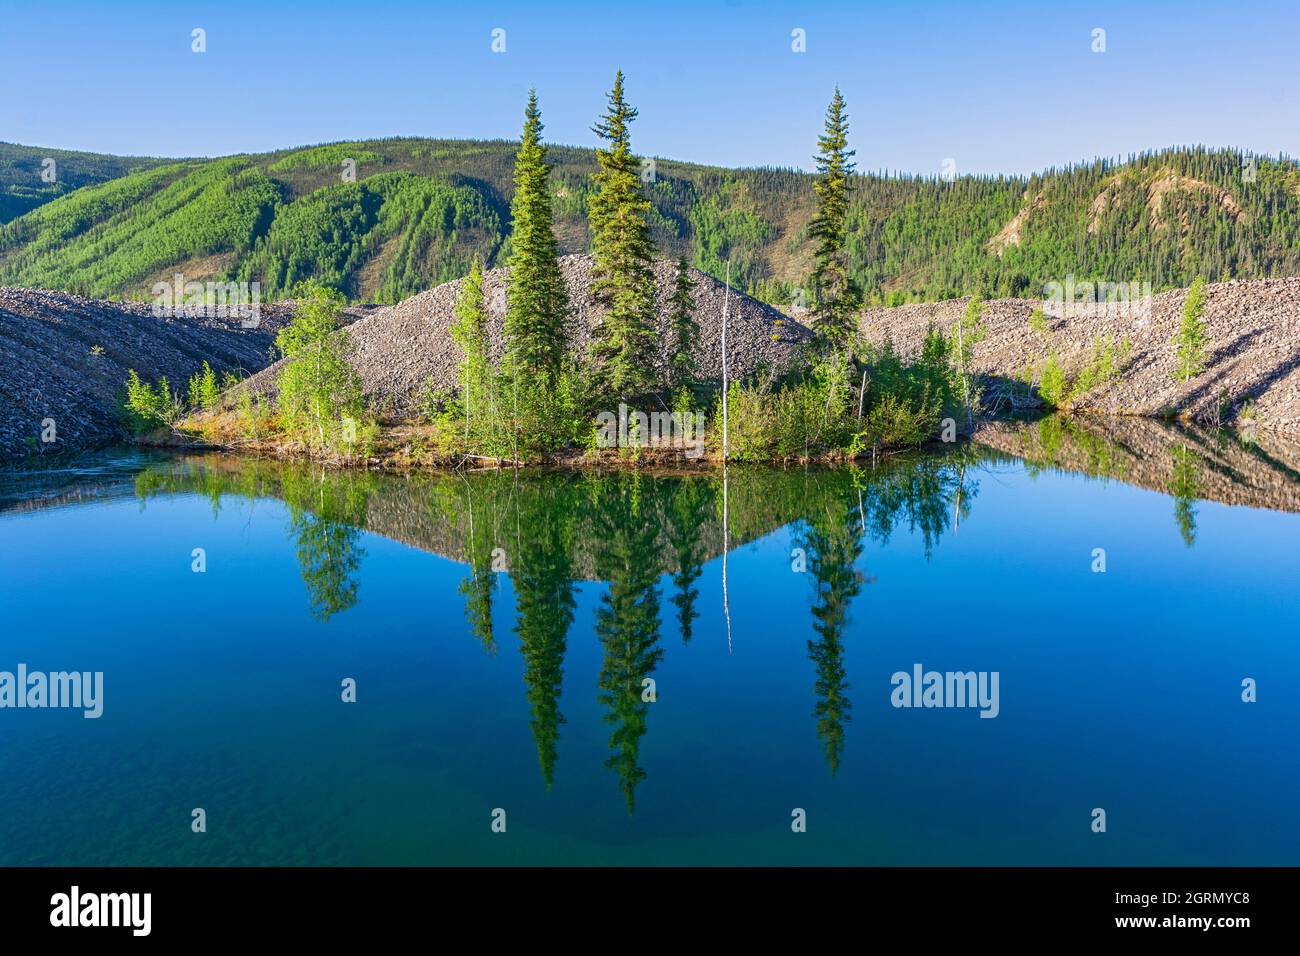 Kanada, Yukon Territory, Klondike Region, Goldbergbau Baggerrückstände Stockfoto